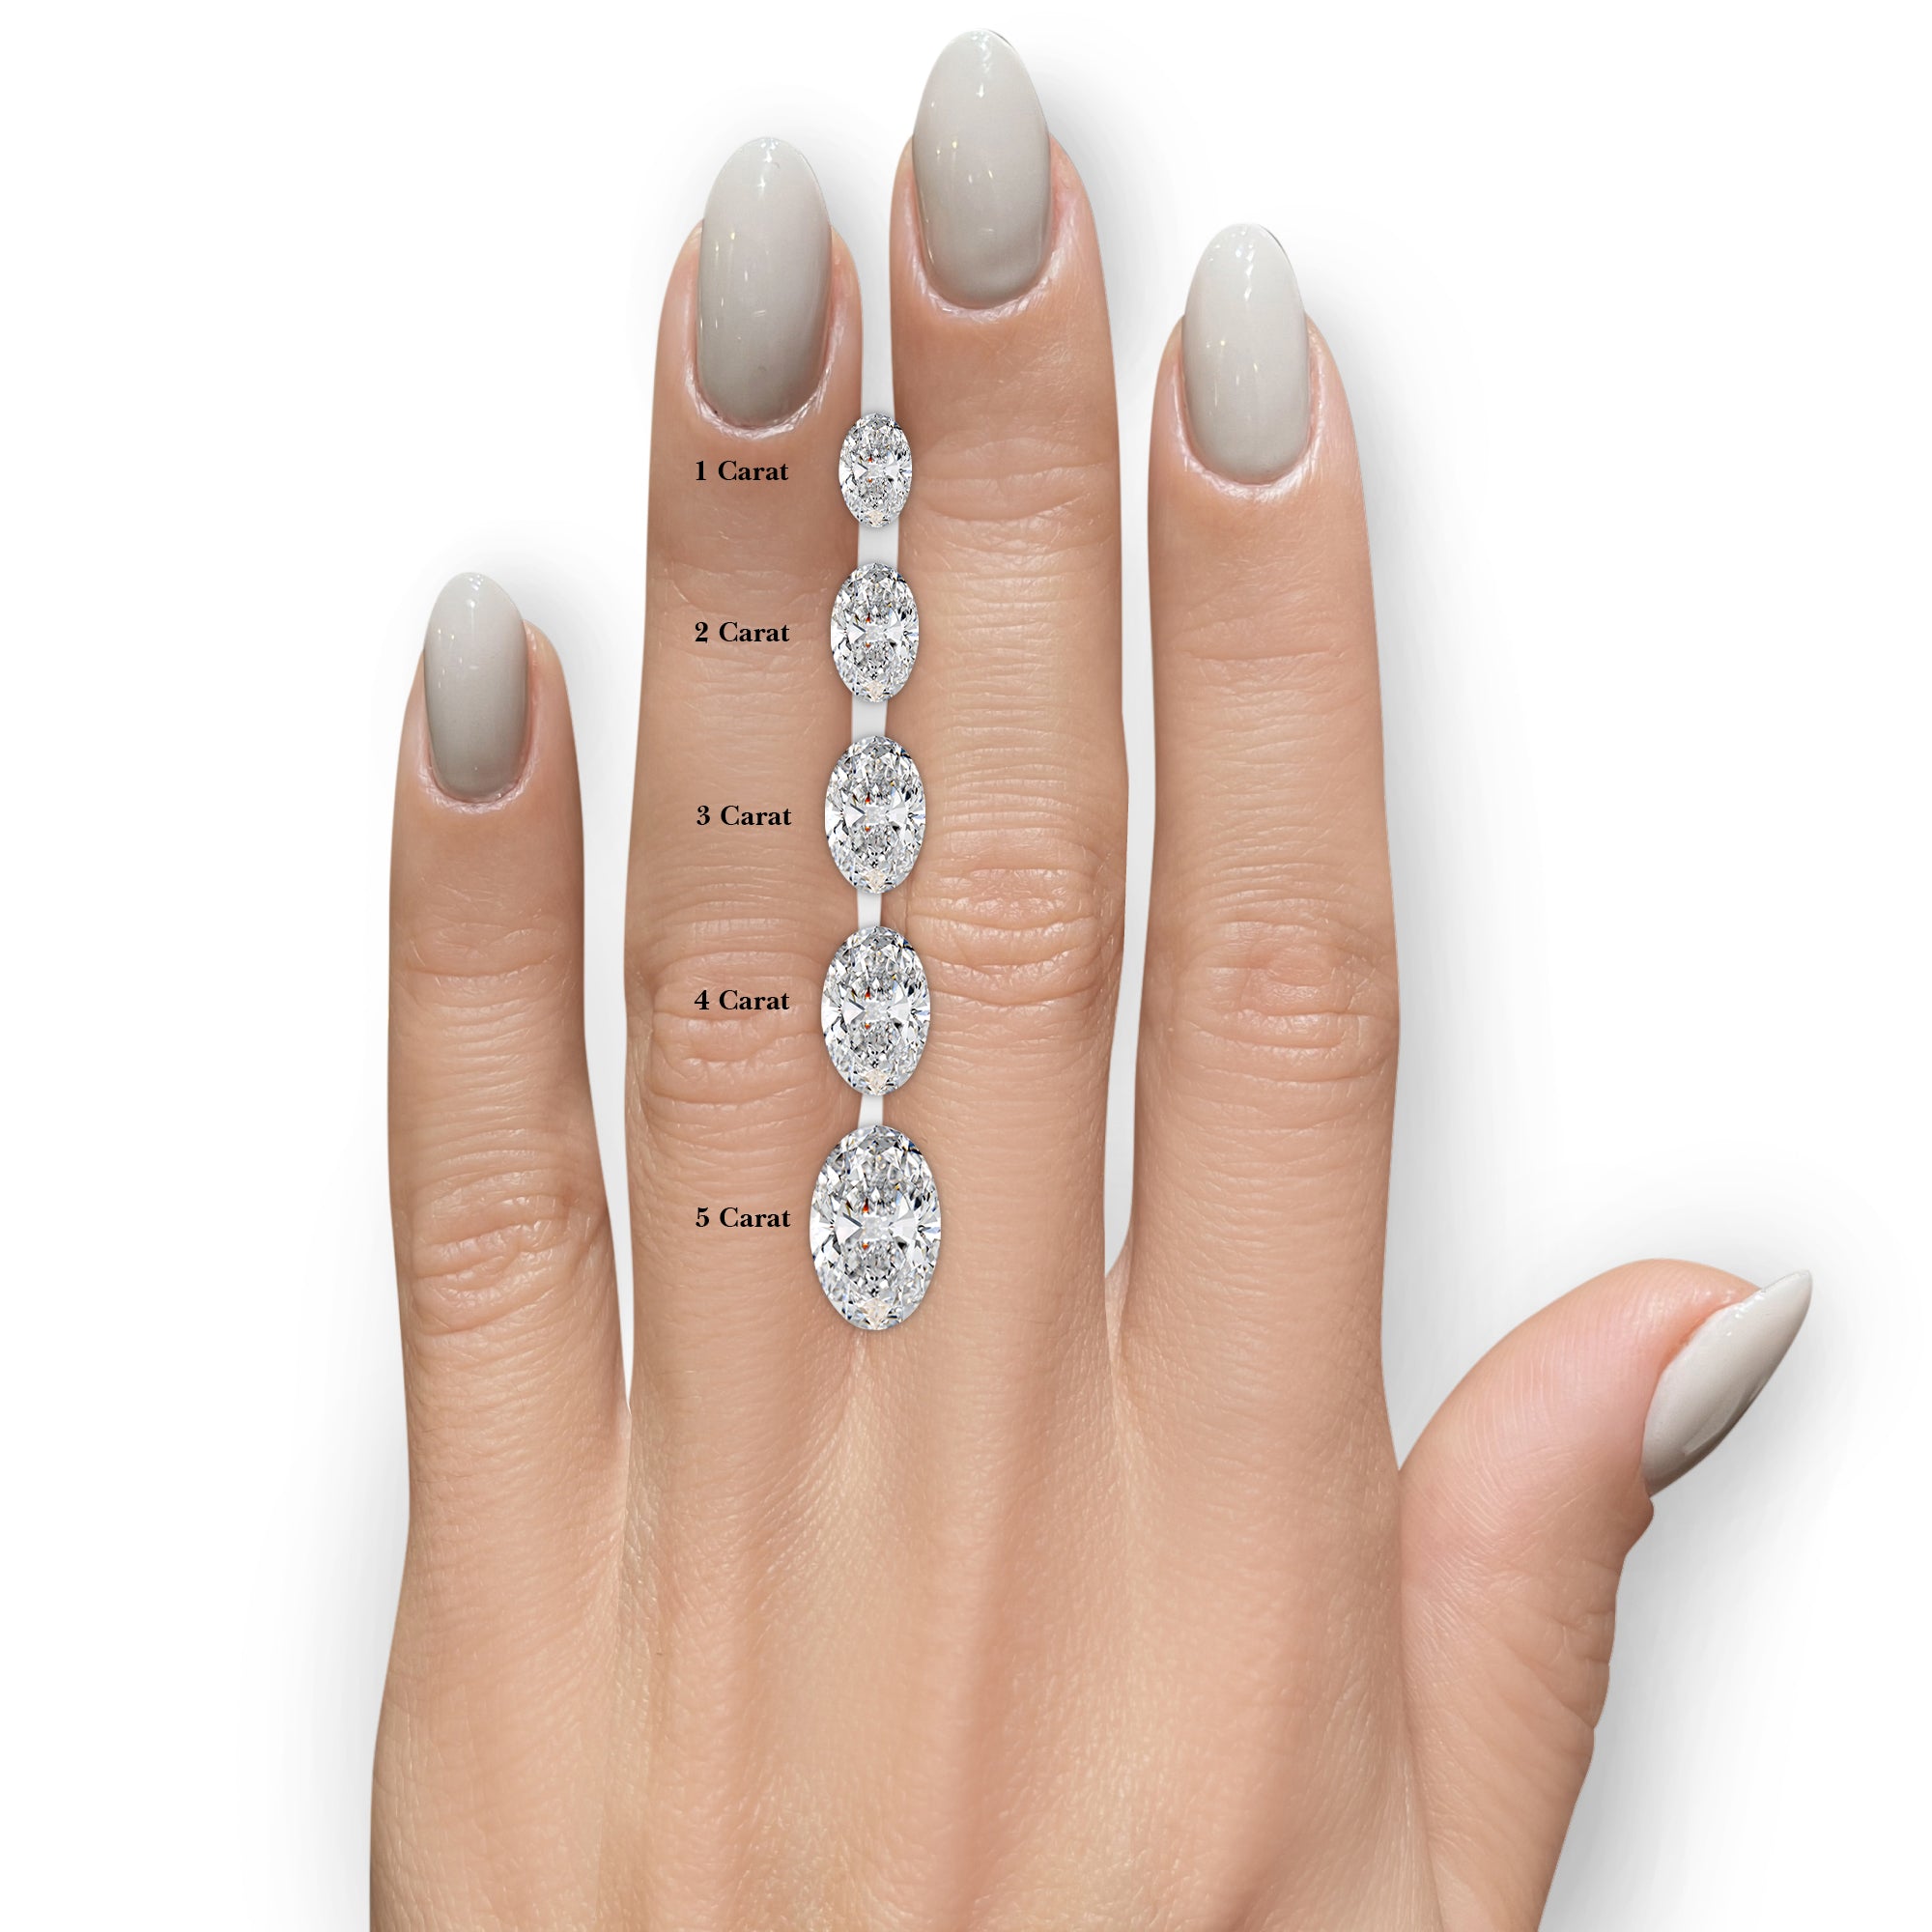 Maya Diamond Engagement Ring -18K White Gold